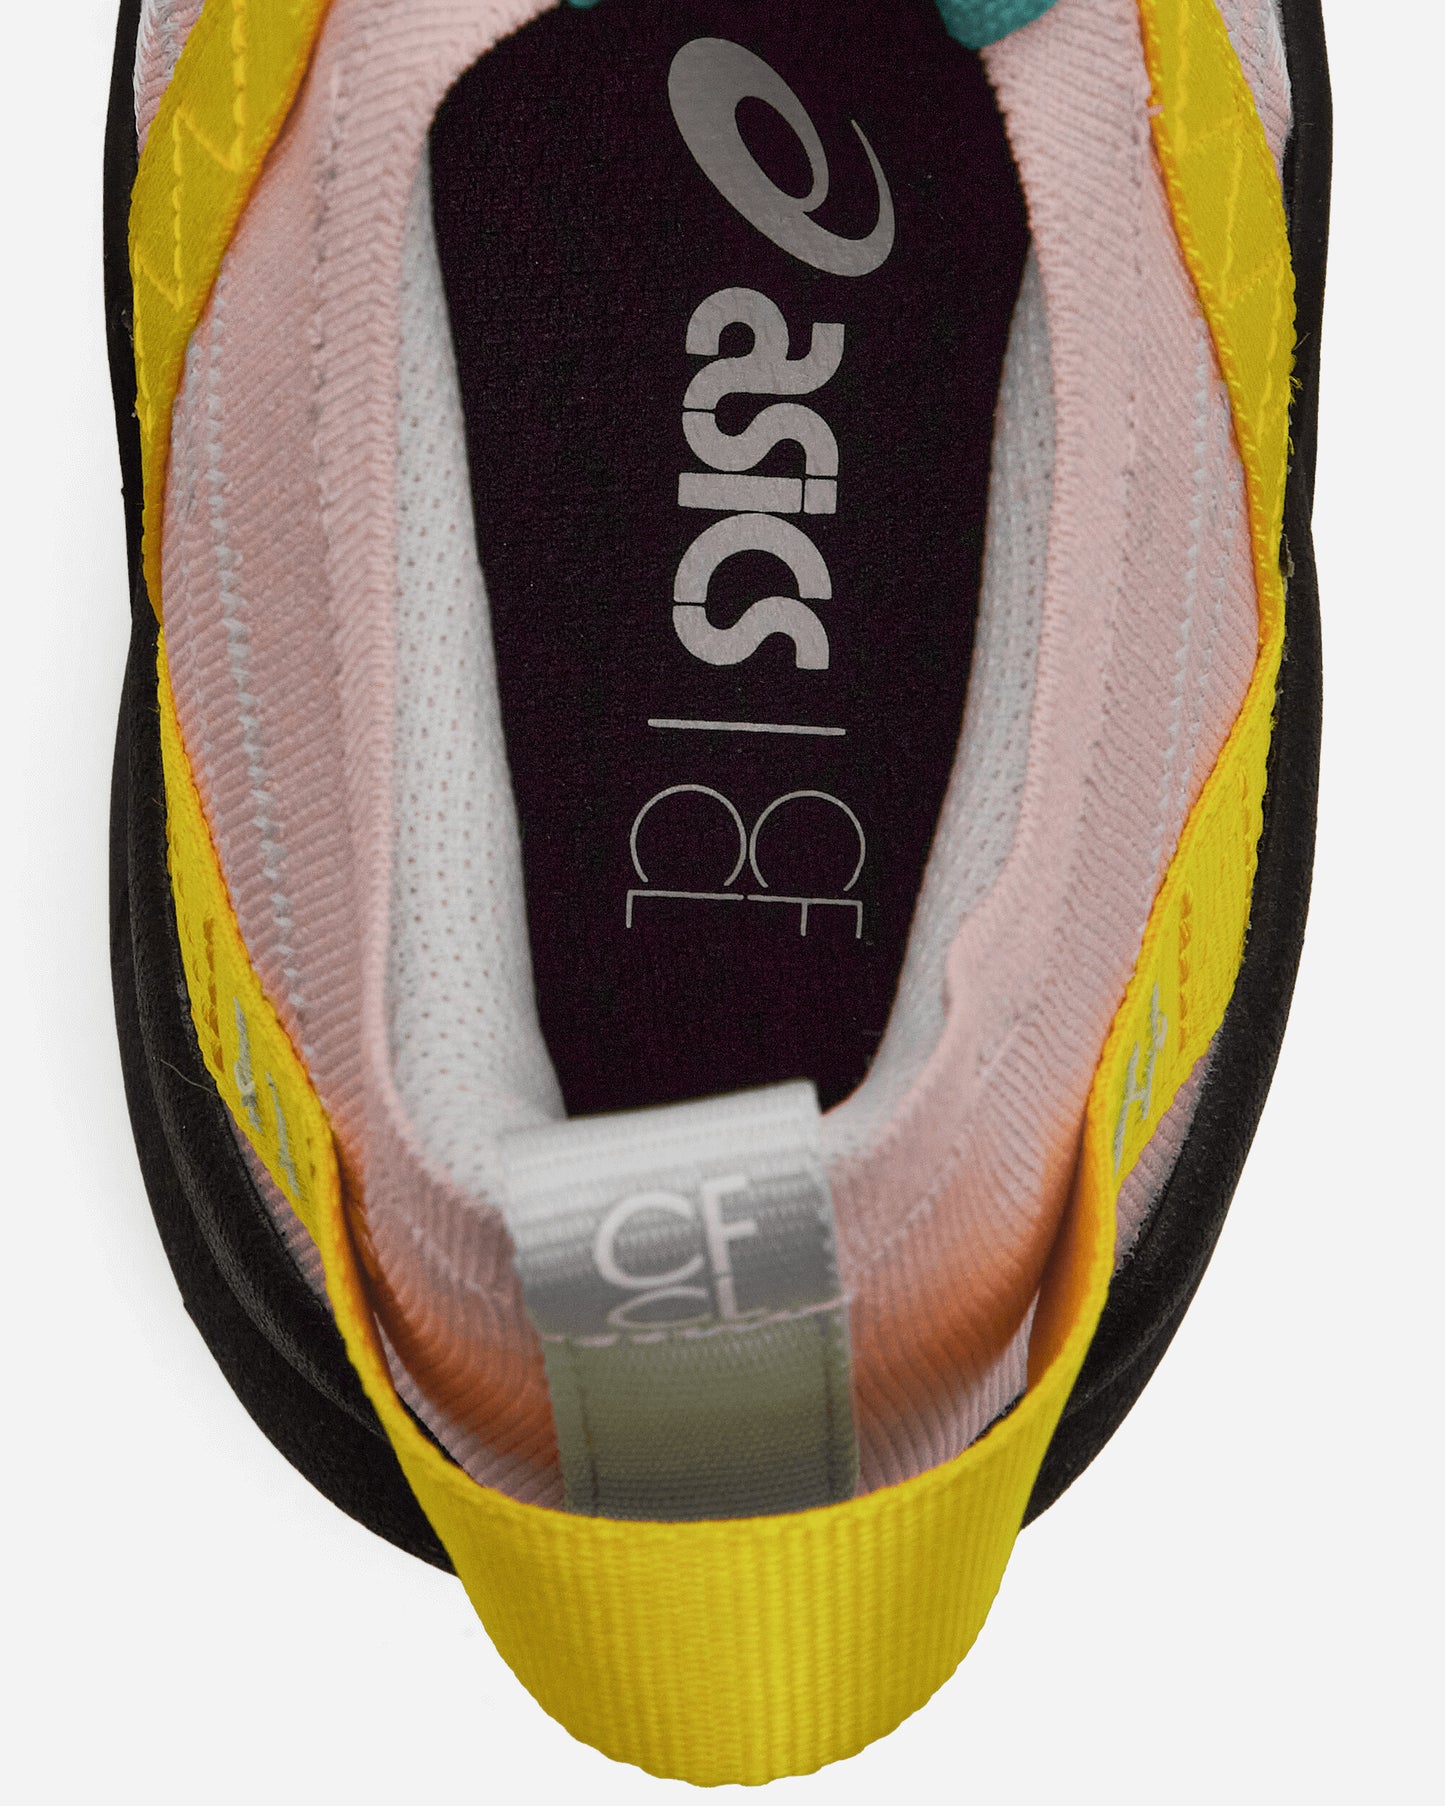 Asics Gel-Lyte III Cm 1.95 Potpourri/Blazing Yellow Sneakers Low 1203A267-700